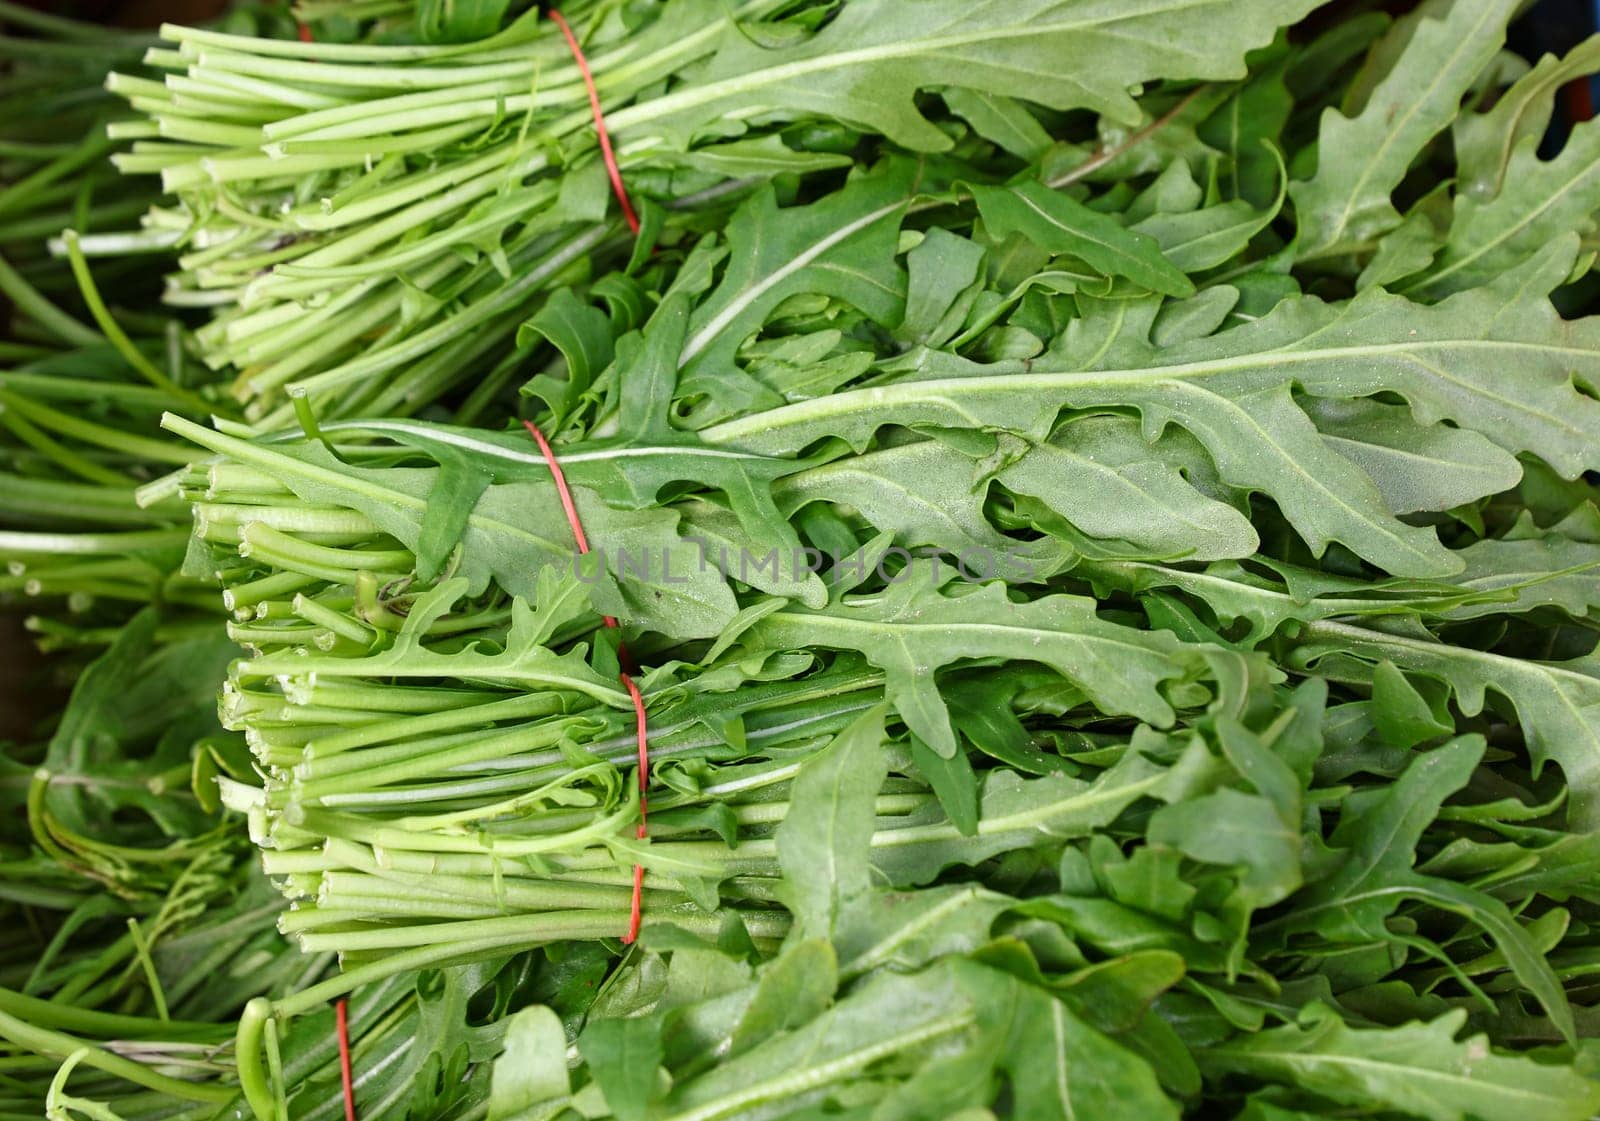 Heap of fresh green spring arugula or rocket salad on farmers market display, close up, high angle view